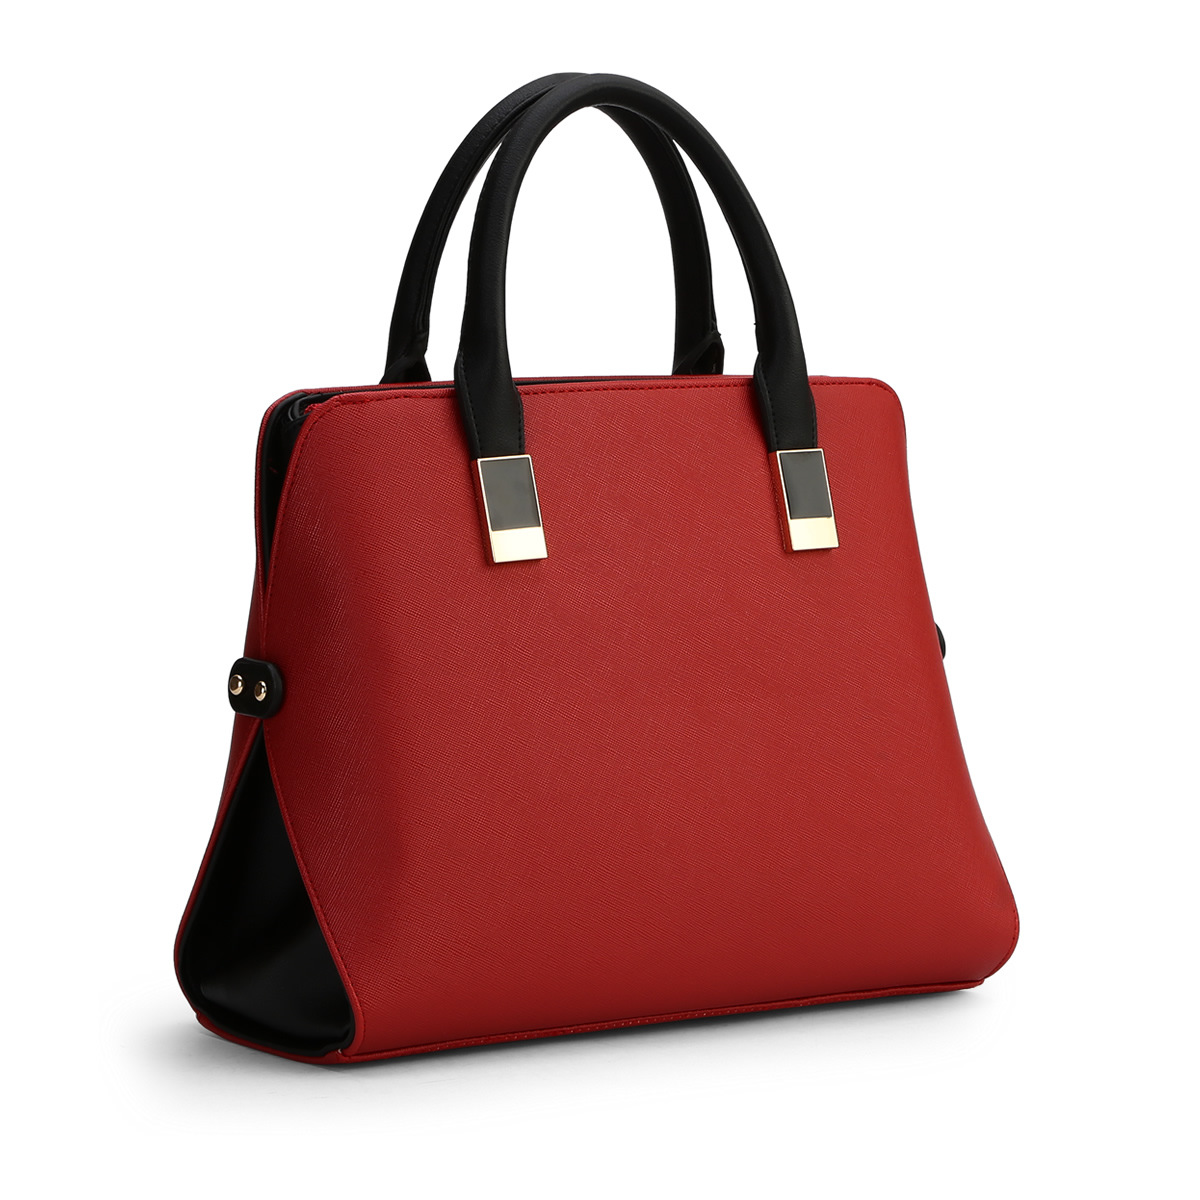 2020 New Fashion High Quality PU Leather Woman Handbag